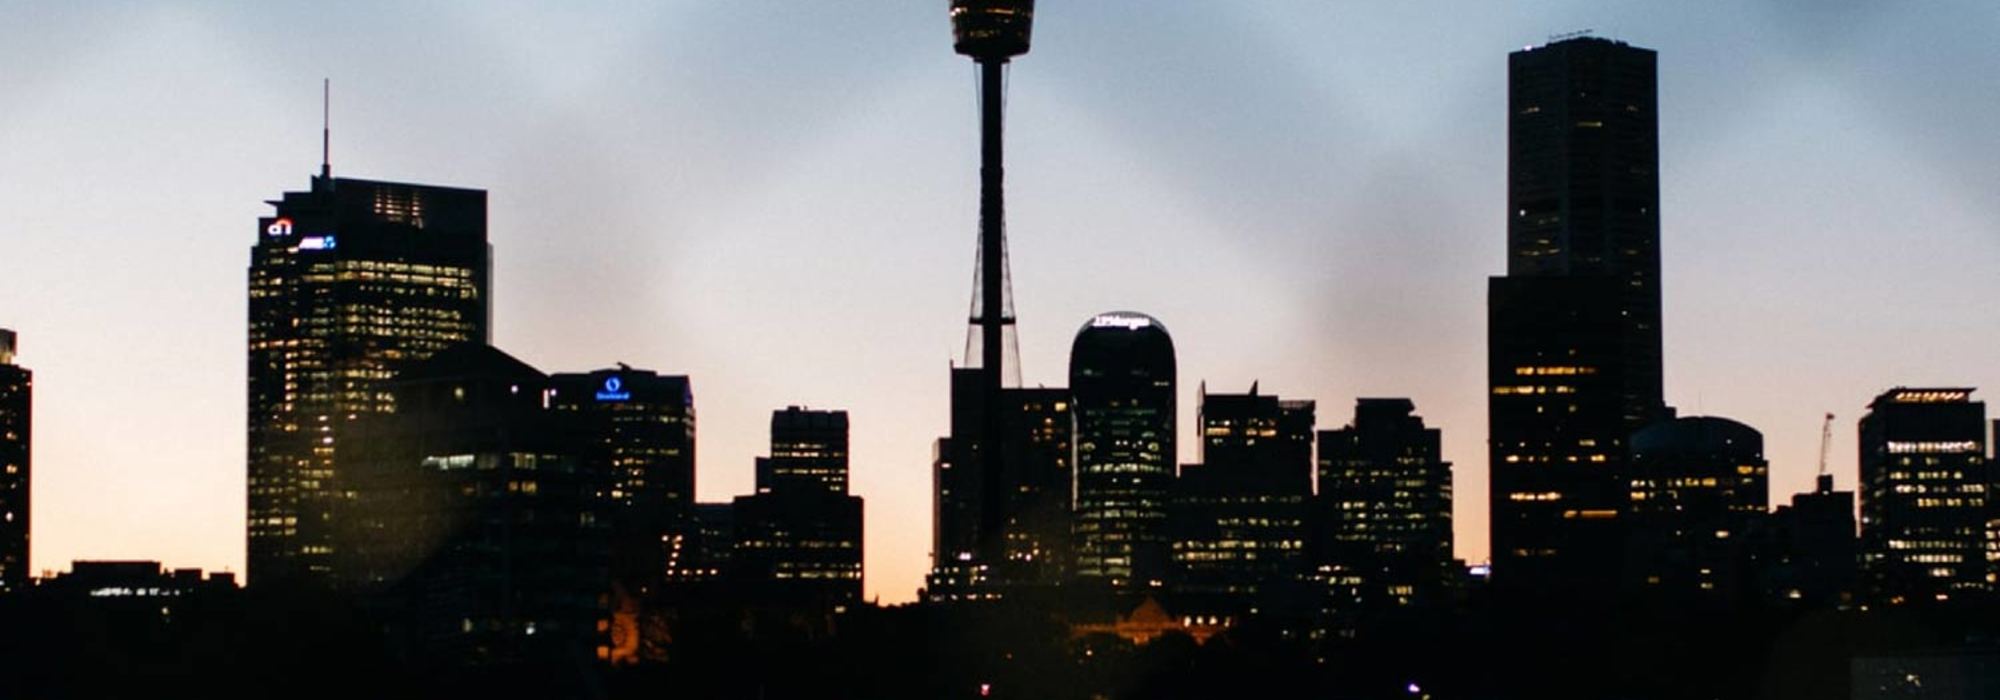 Sydney City Twilight Building Sunset